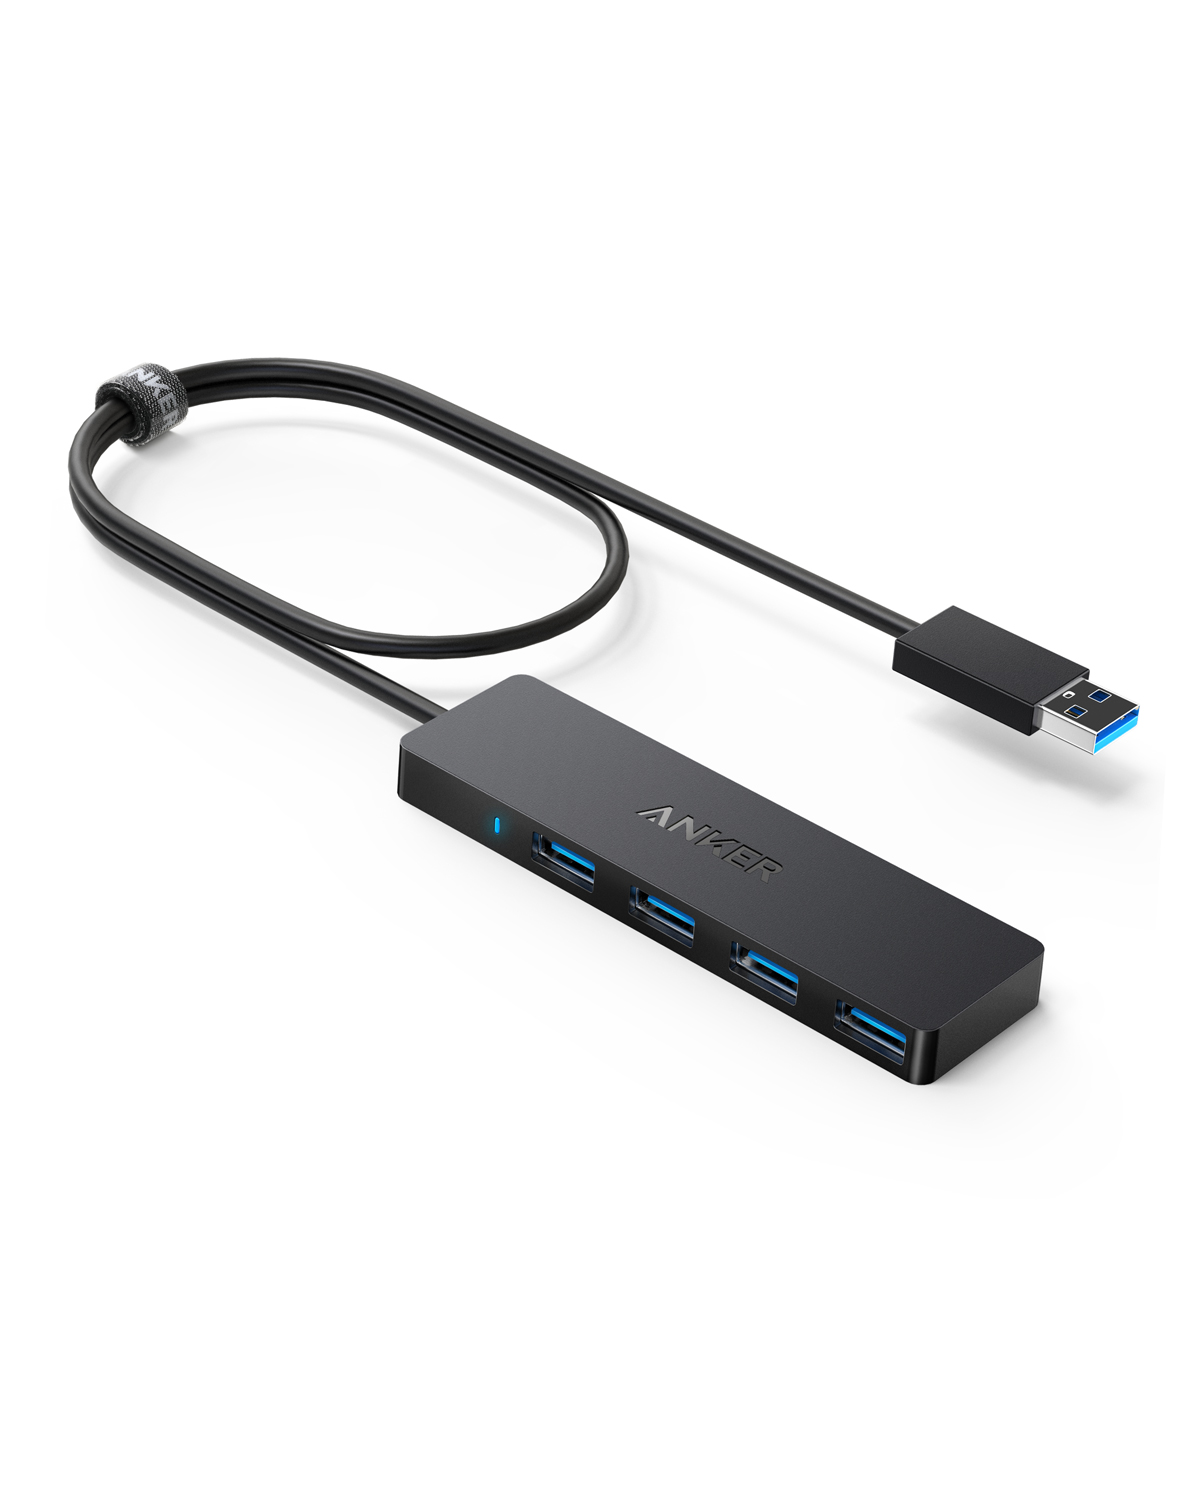 Anker 4-Port USB 3.0 Data Hub Adapter Ultra-Slim Splitter with 2 ft Cable - image 1 of 6